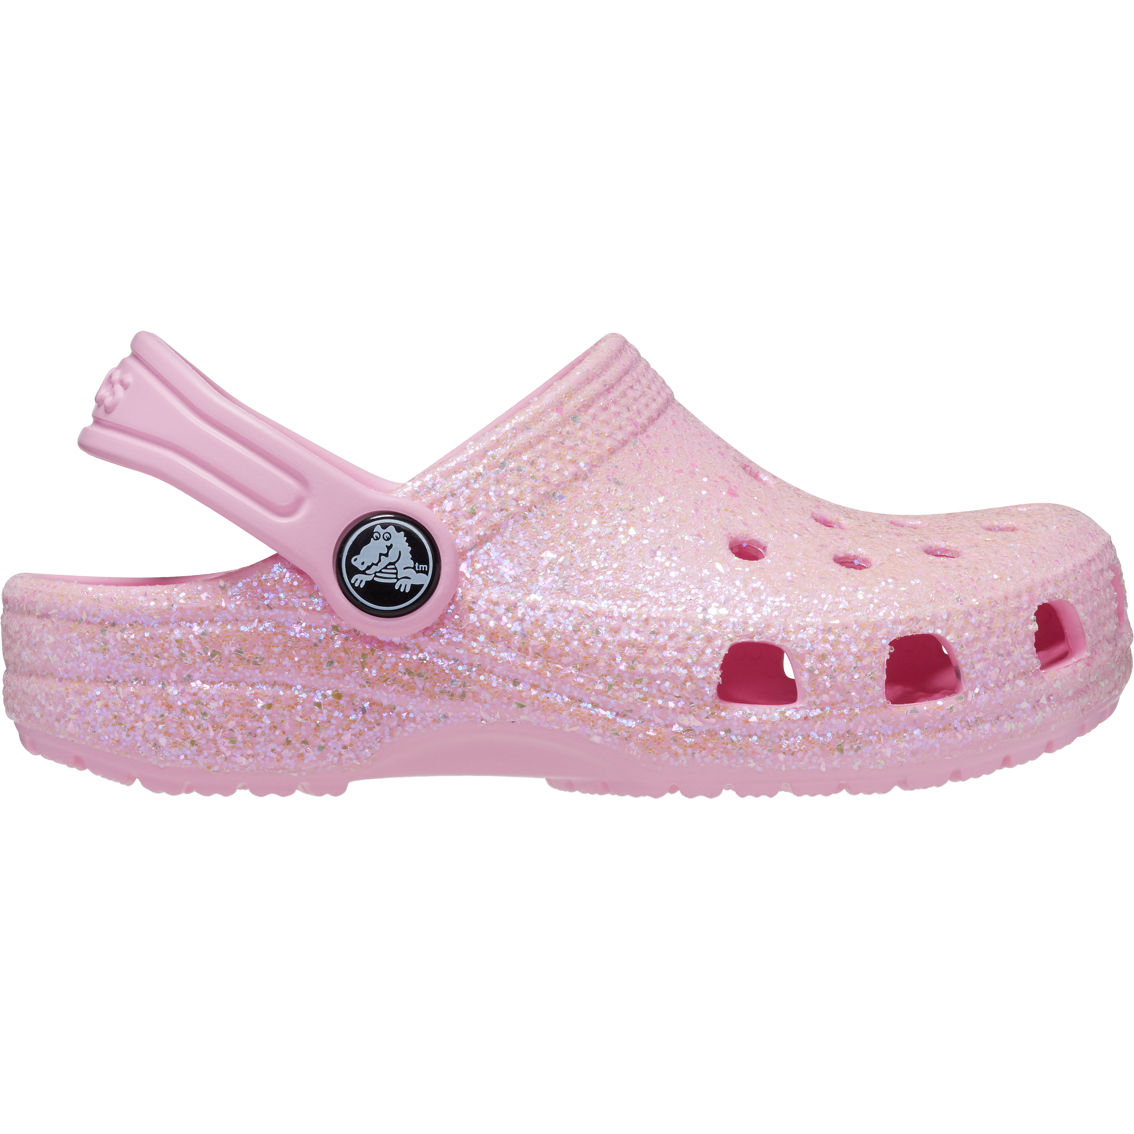 Crocs Toddler Girls Classic Glitter Clogs - Image 2 of 6